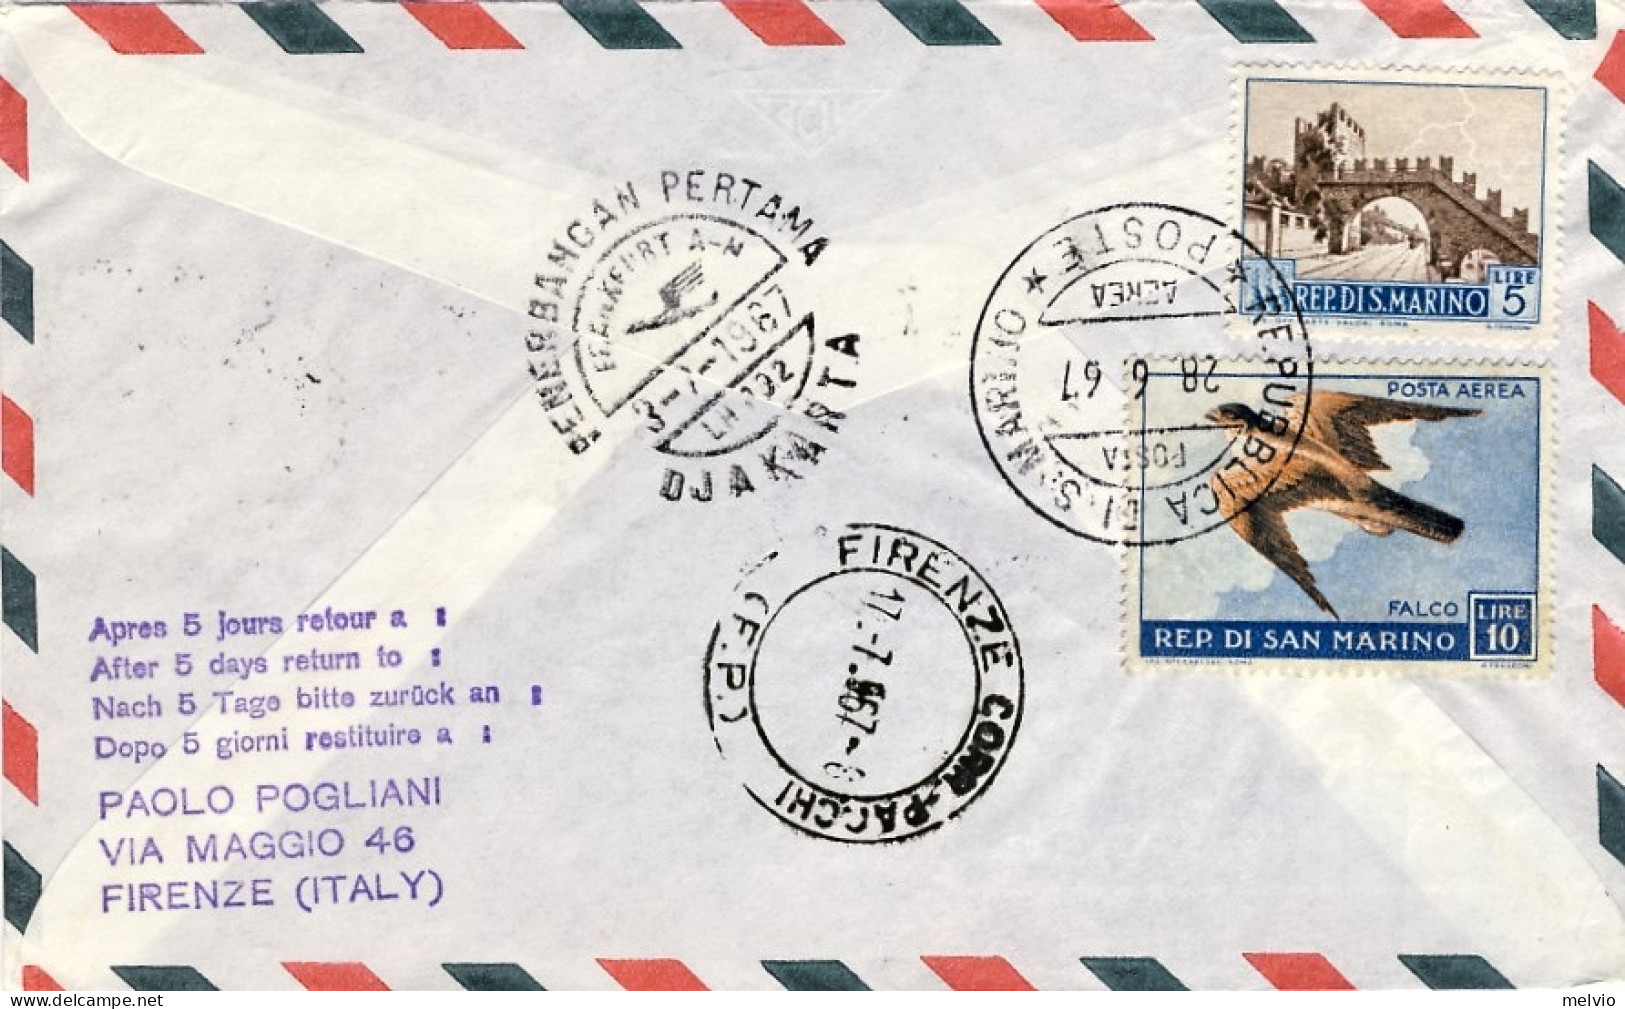 San Marino-1967 I^volo Lufthansa LH 692 Francoforte-Djakarta - Luchtpost